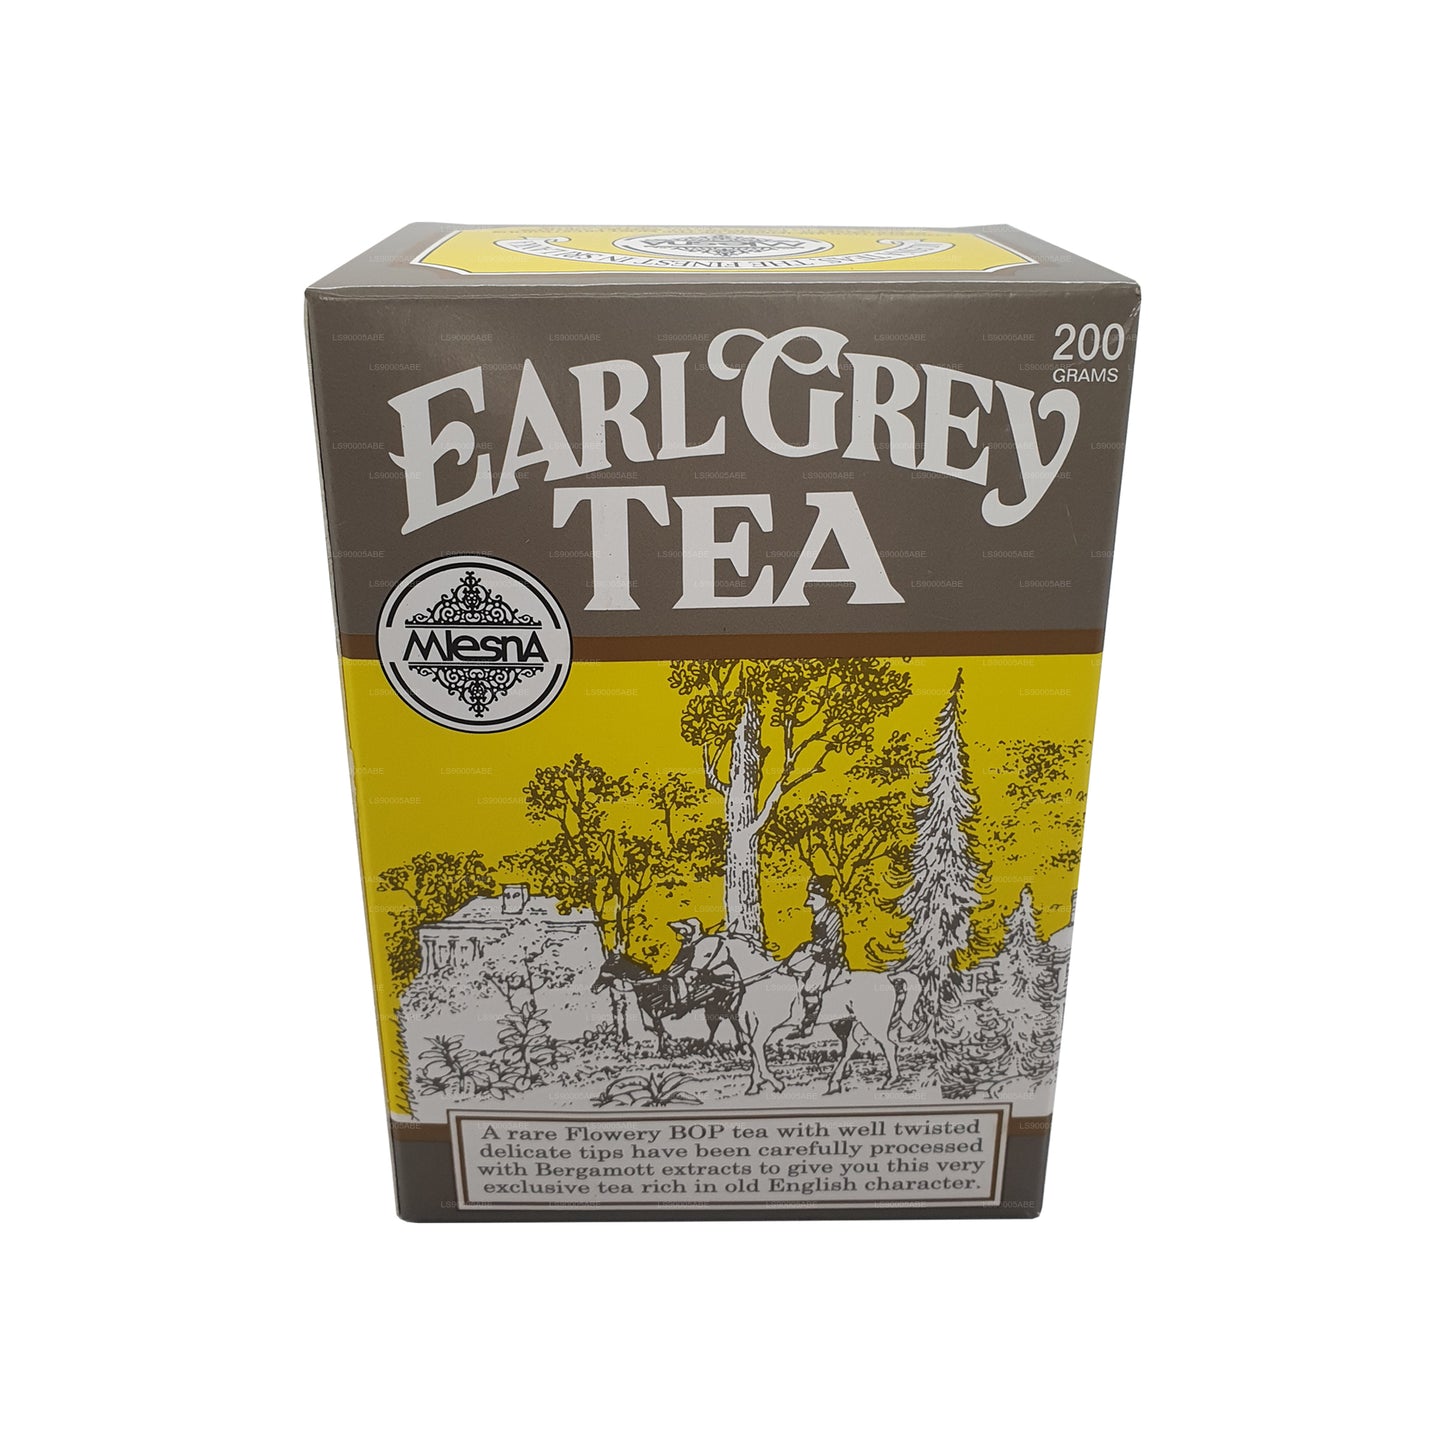 Mlesna Earl Grey Loose Leaf Tea